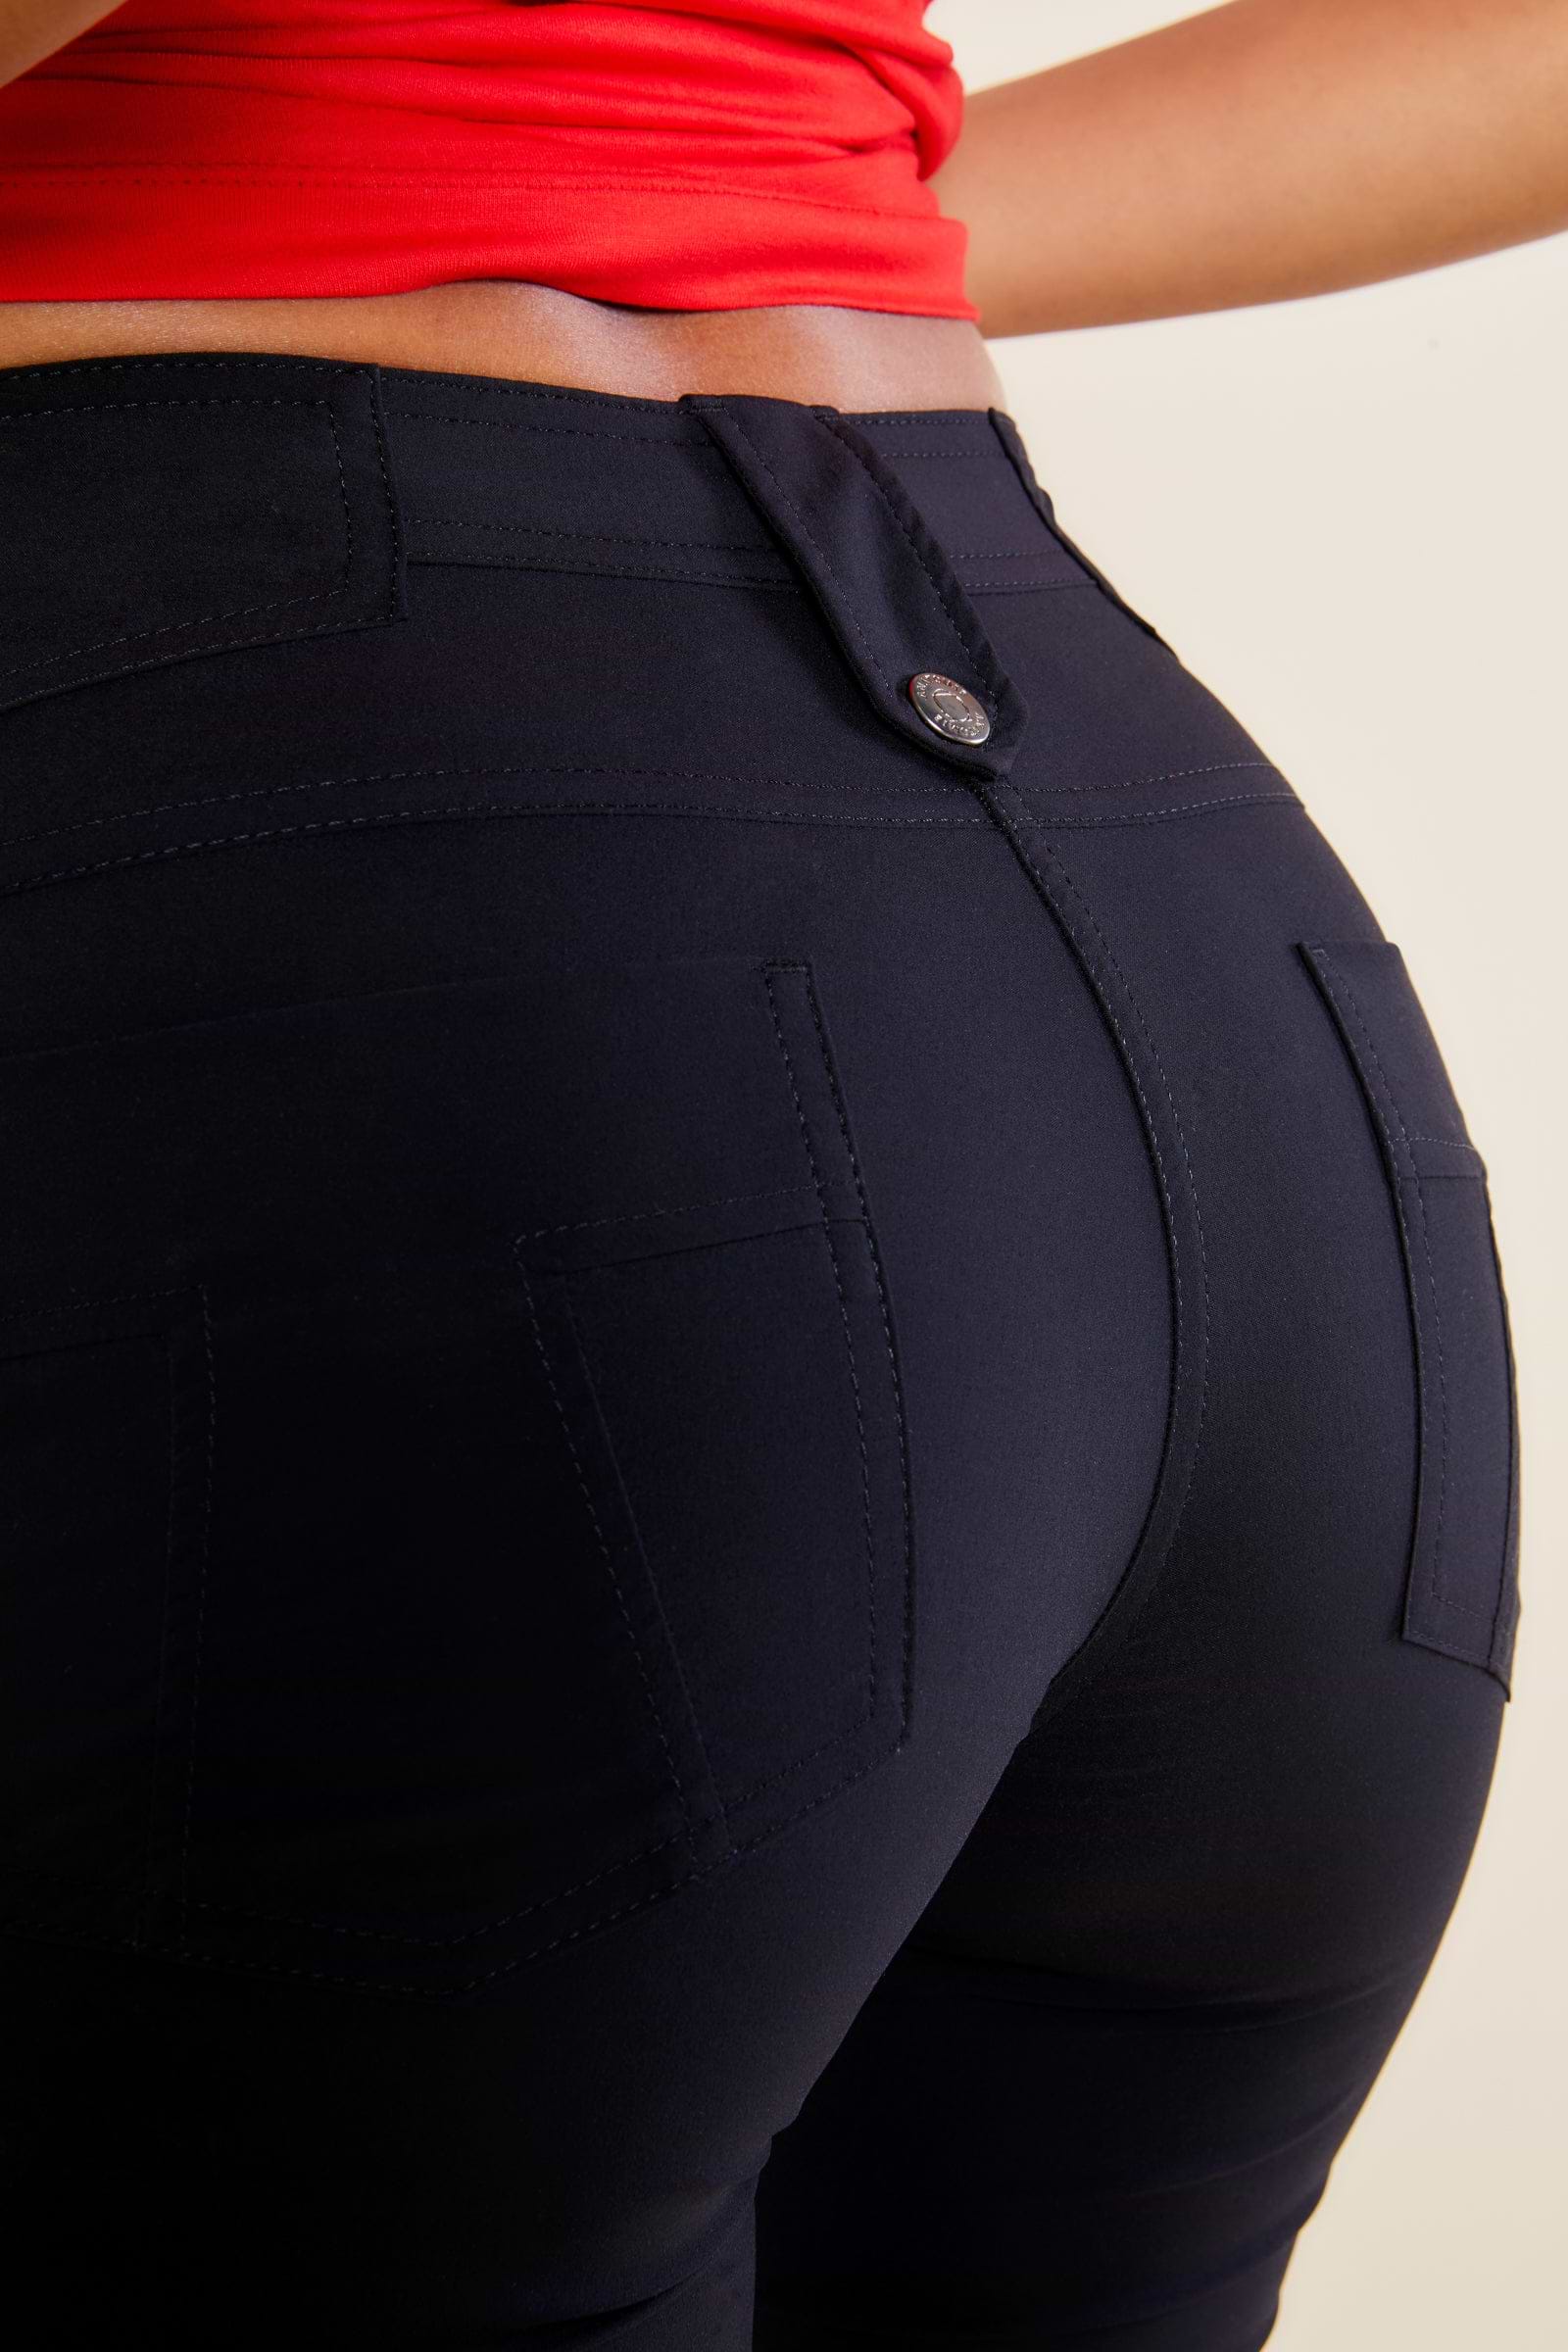 The Best Travel Pants. Back Pocket of the Skyler Travel Pant in Black